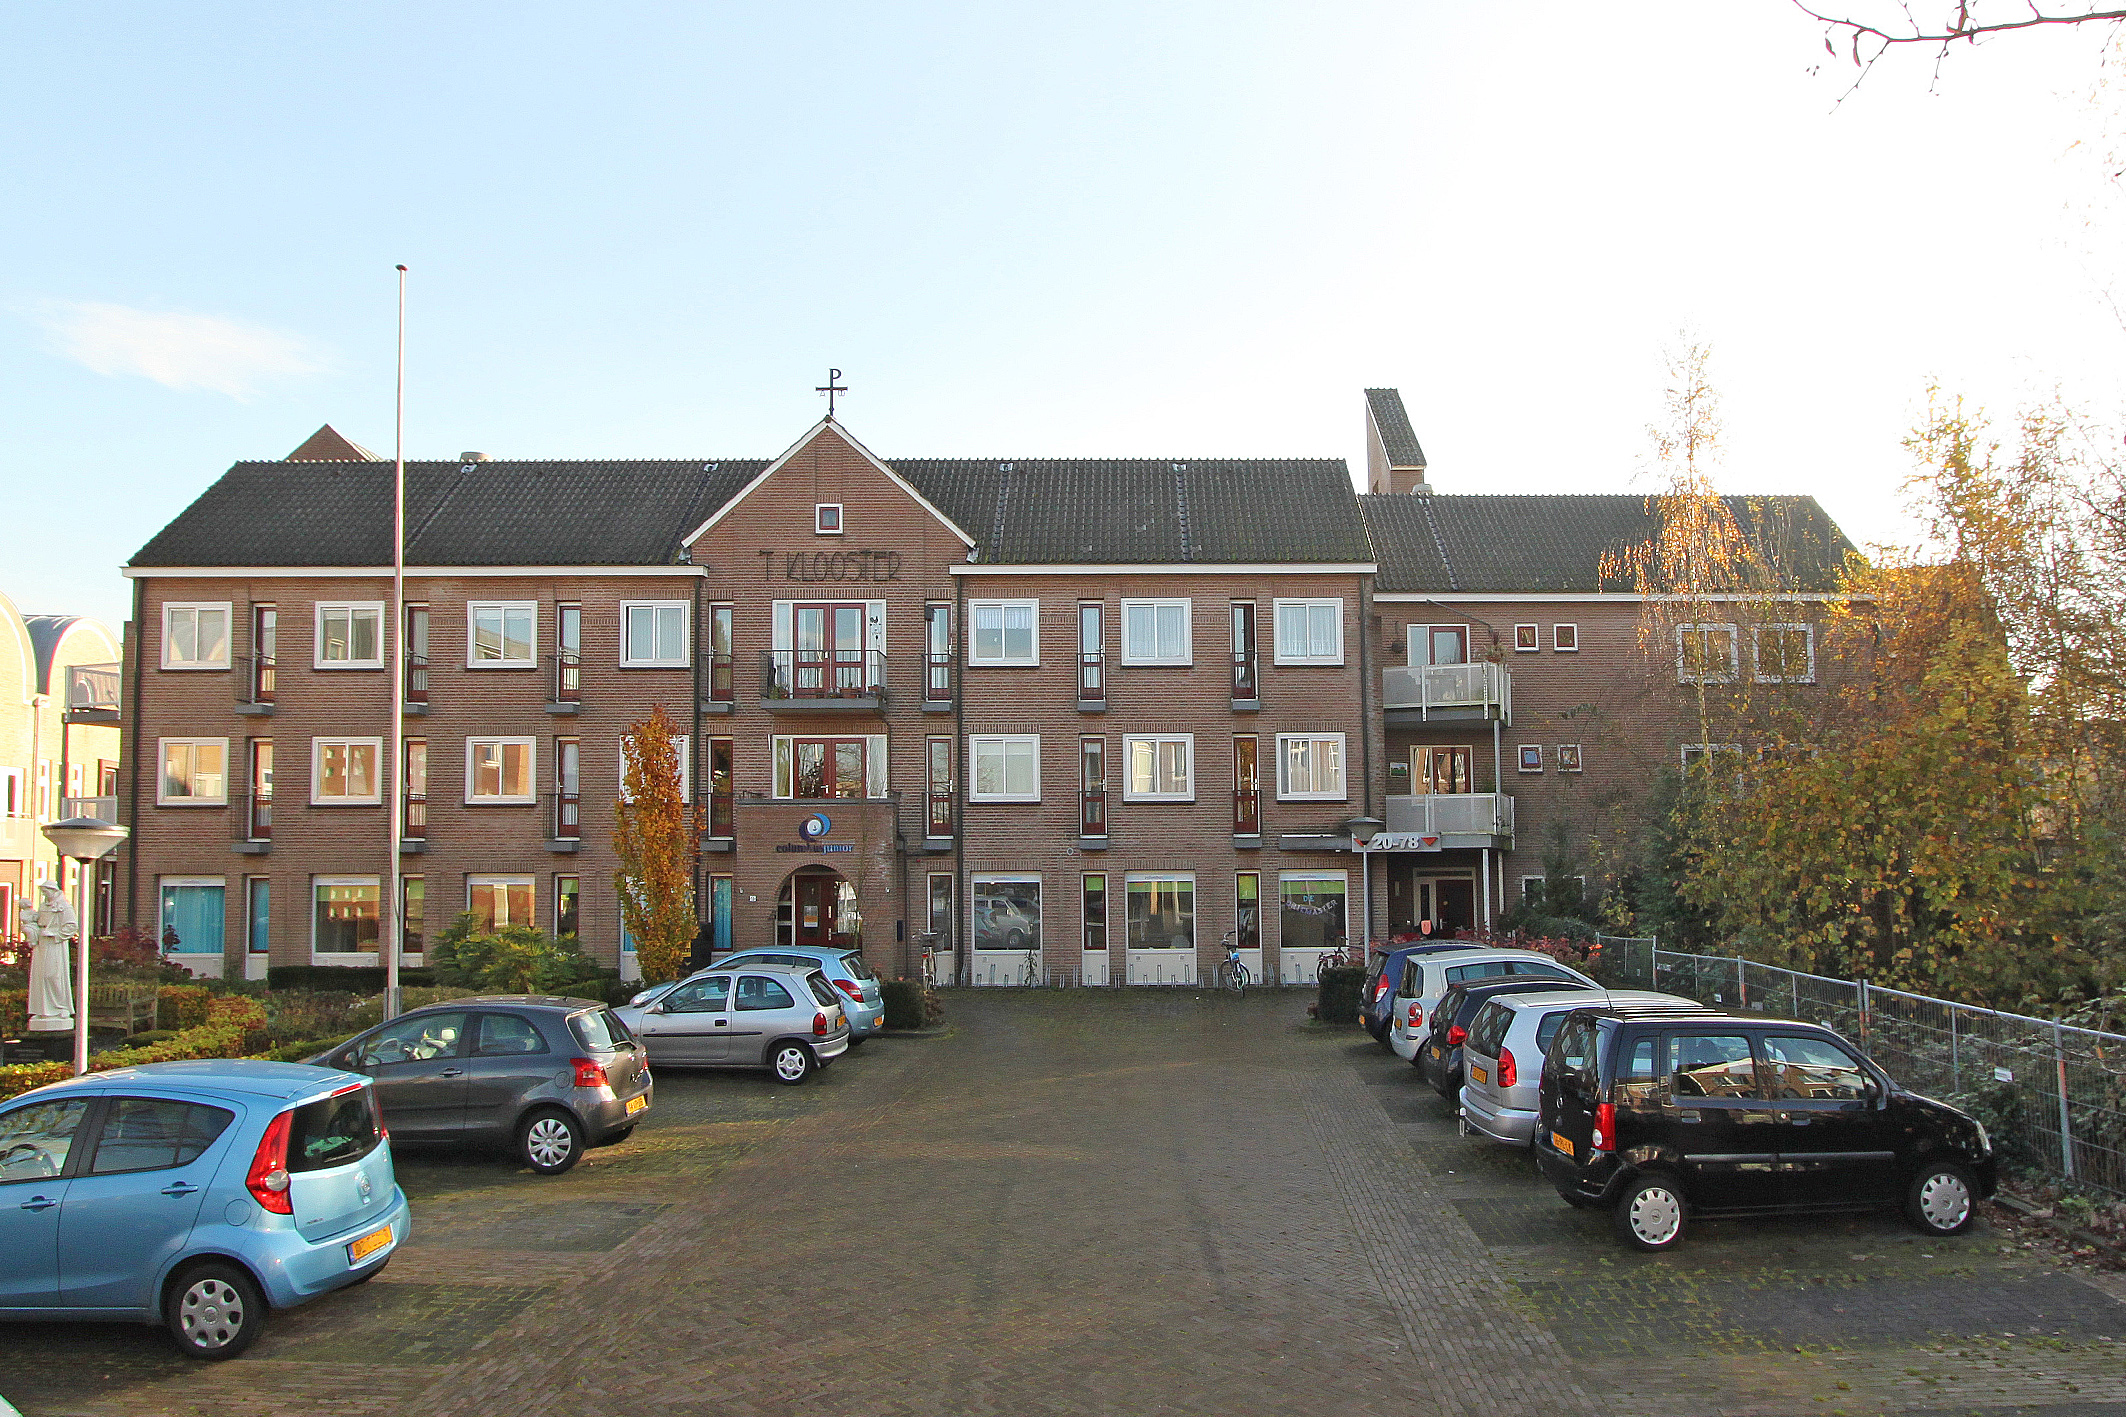 Gasthuisstraat 40, 7571 CC Oldenzaal, Nederland